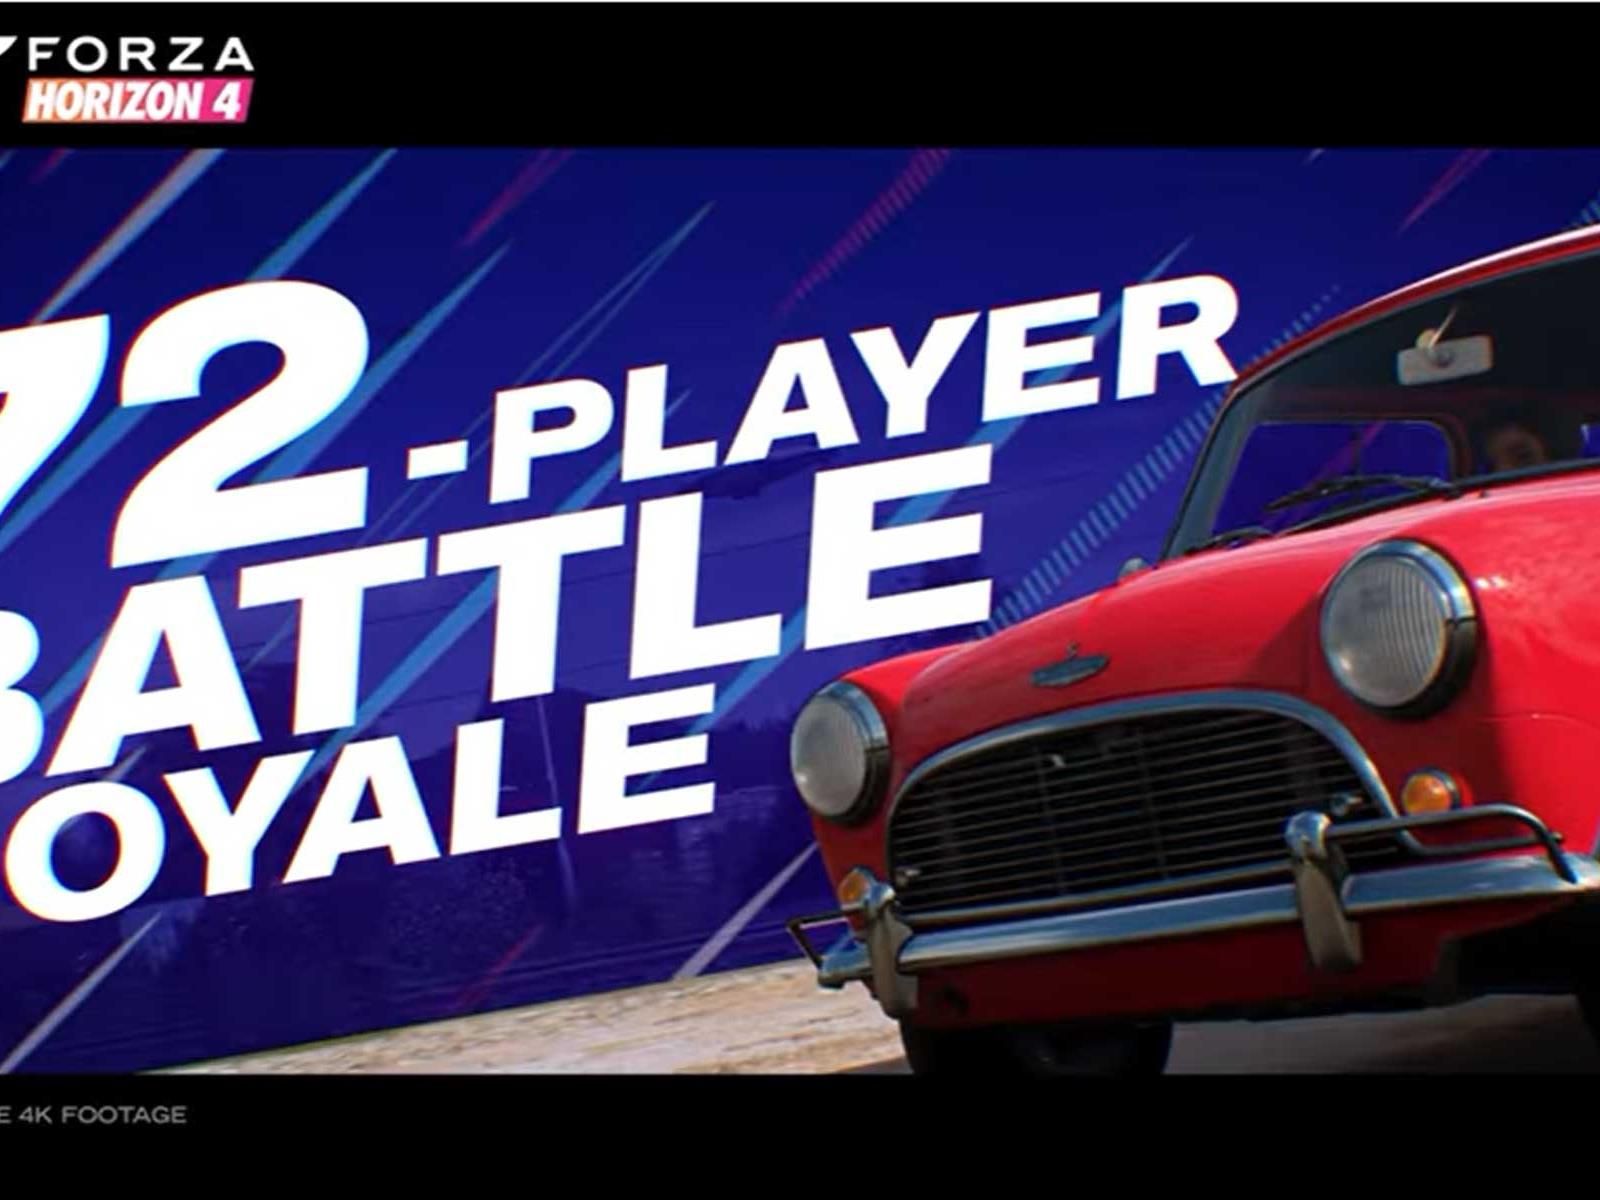 Forza Horizon4  The Eliminator Announce Trailer 